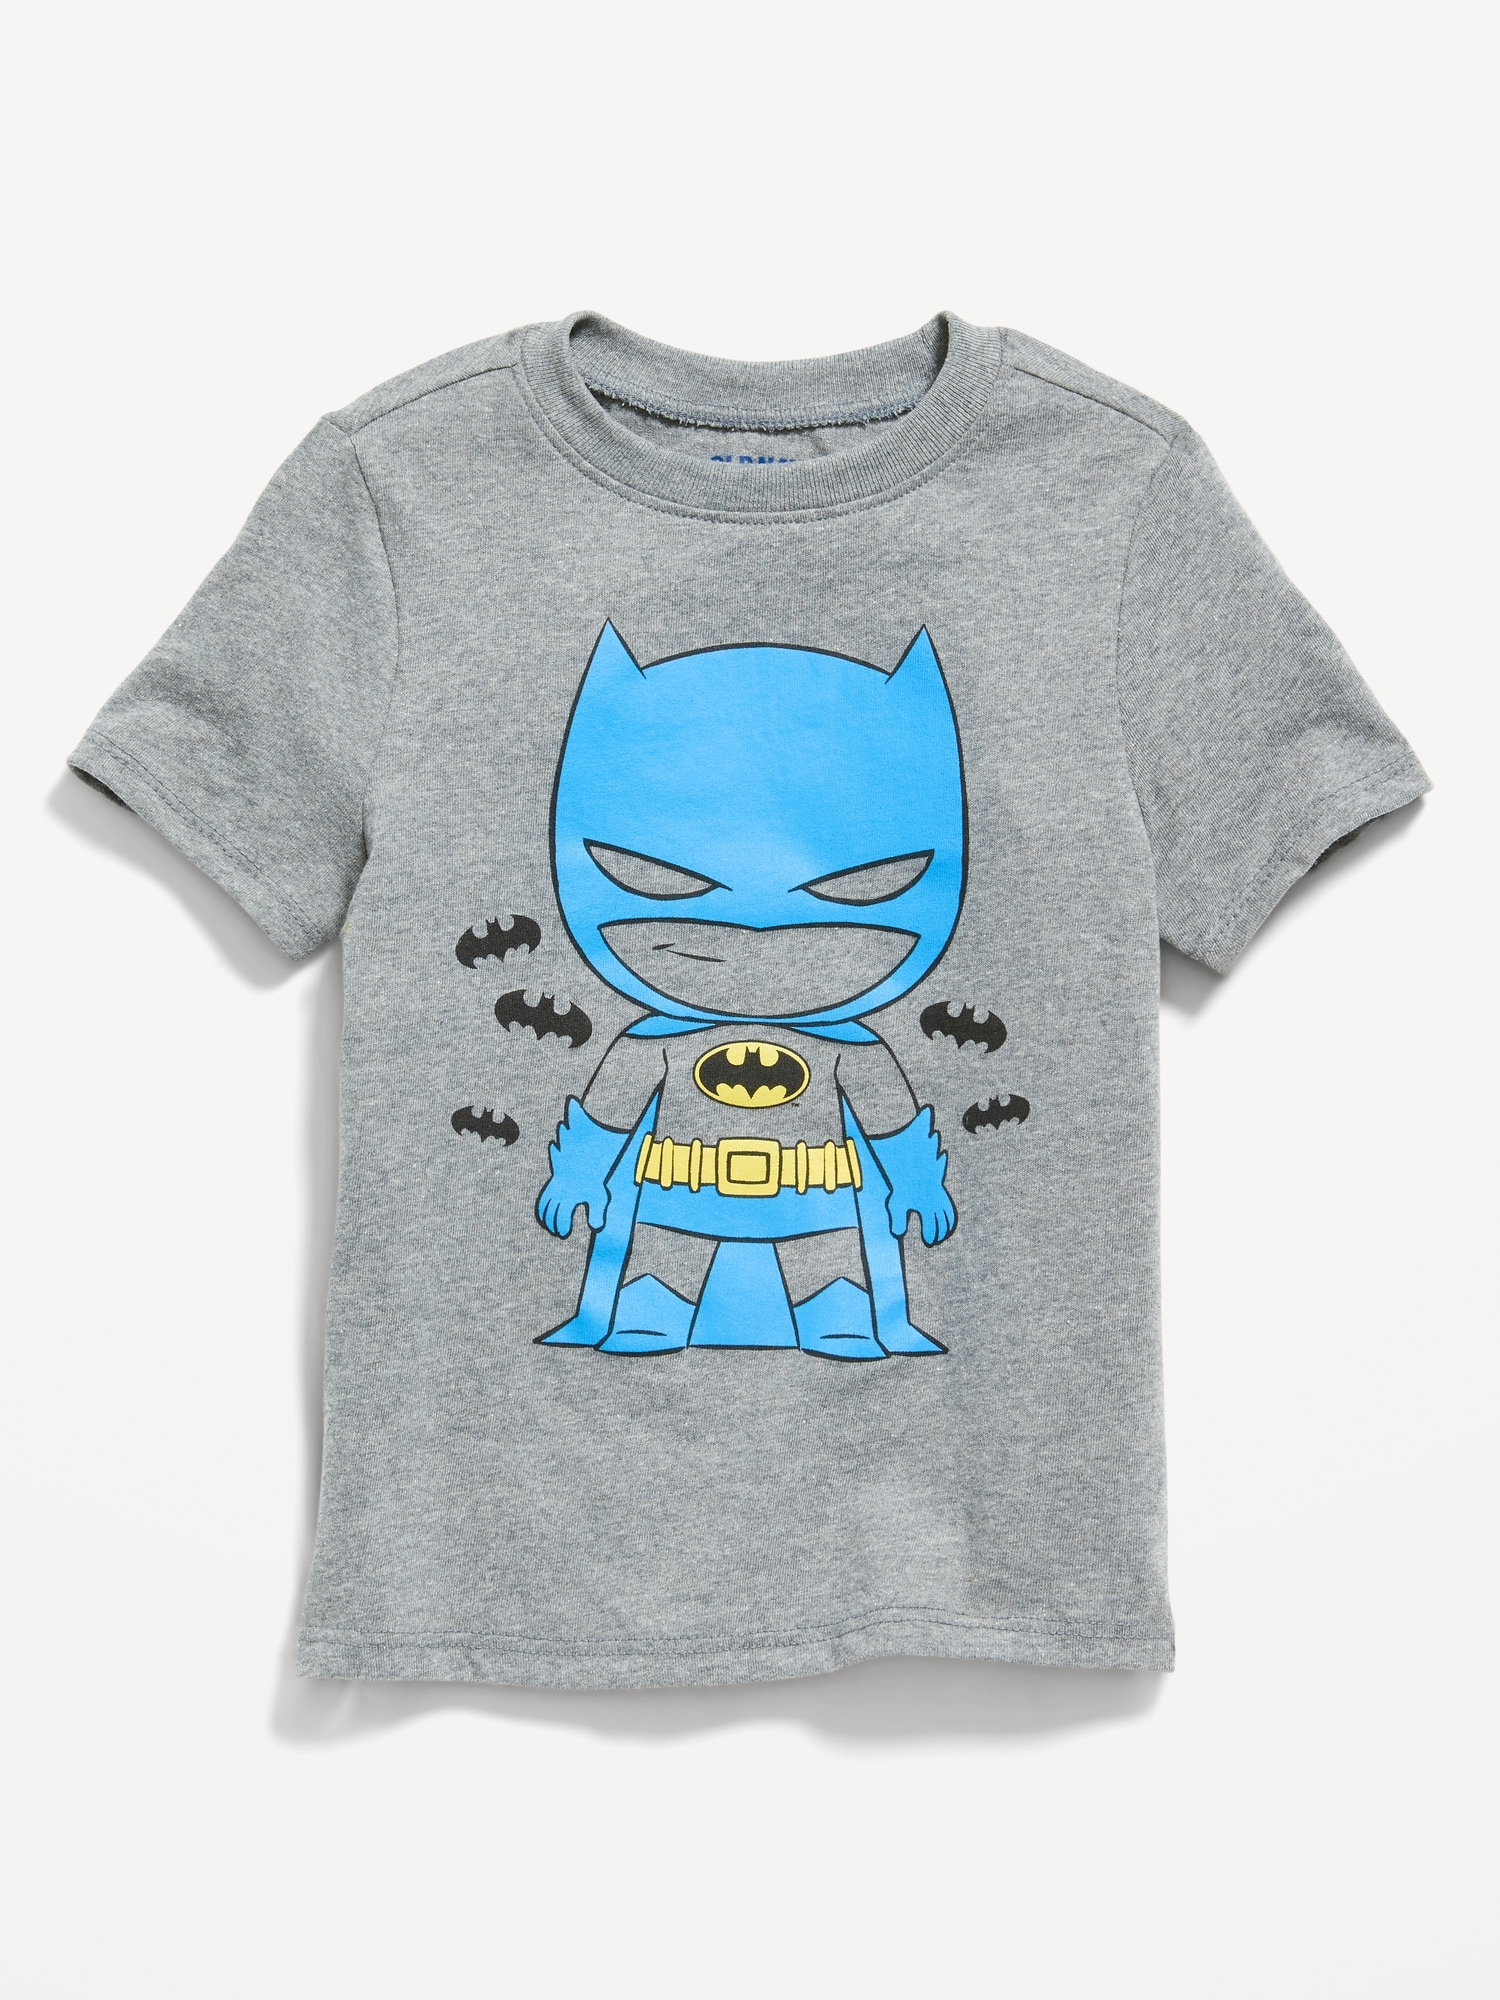 OLD NAVY DC Comic Batman PJs Size 7S Kids pajama set 